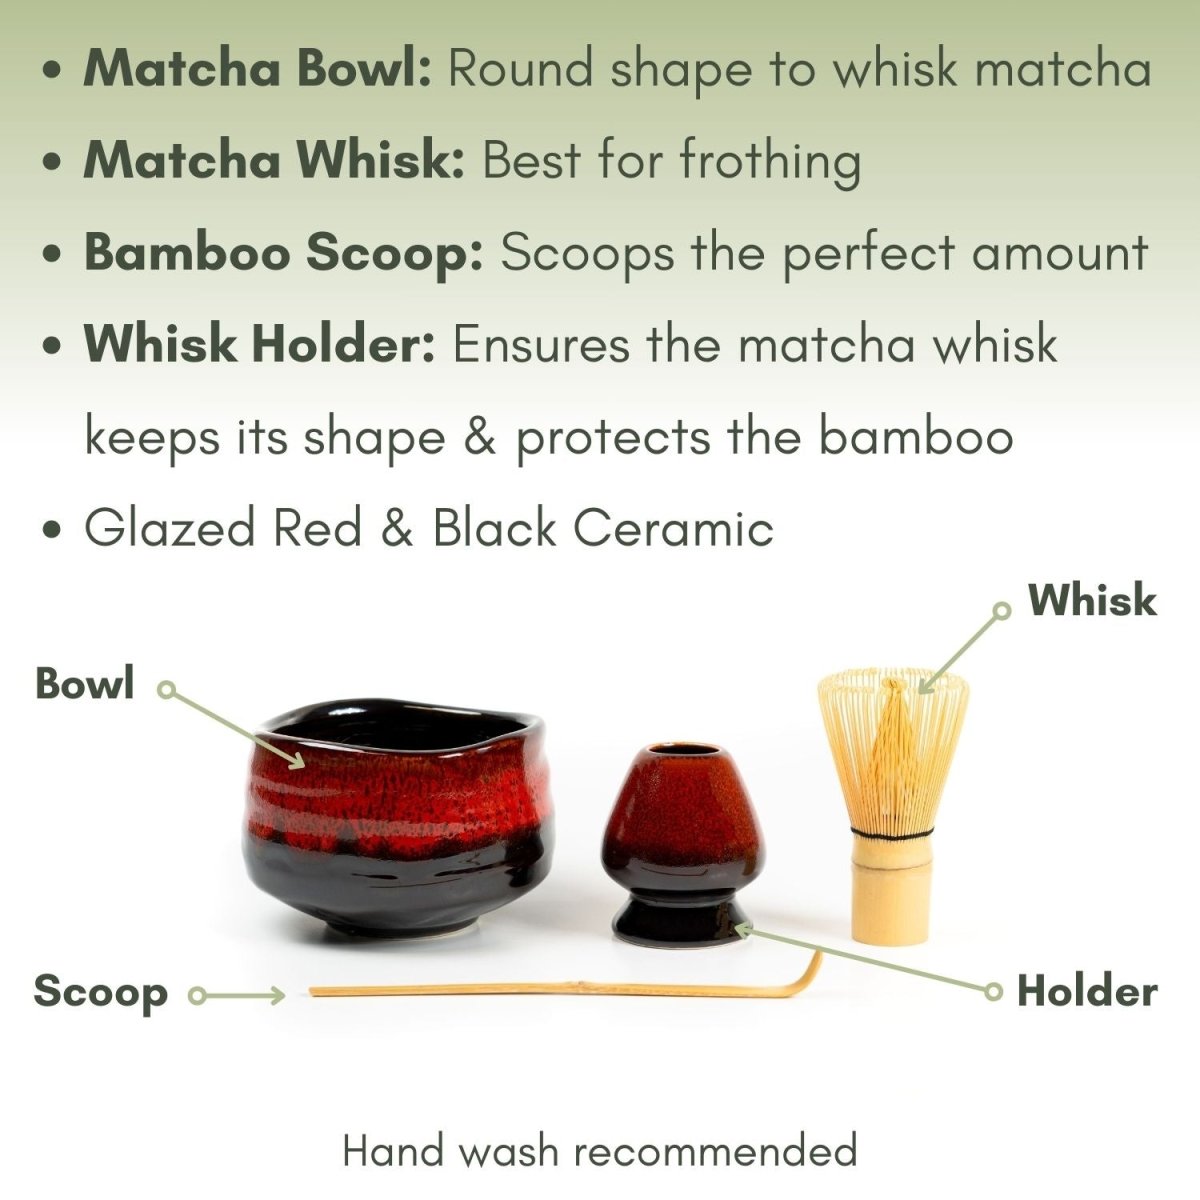 Limited Edition Matcha Starter Kit - Matcha - Full Leaf Tea Company